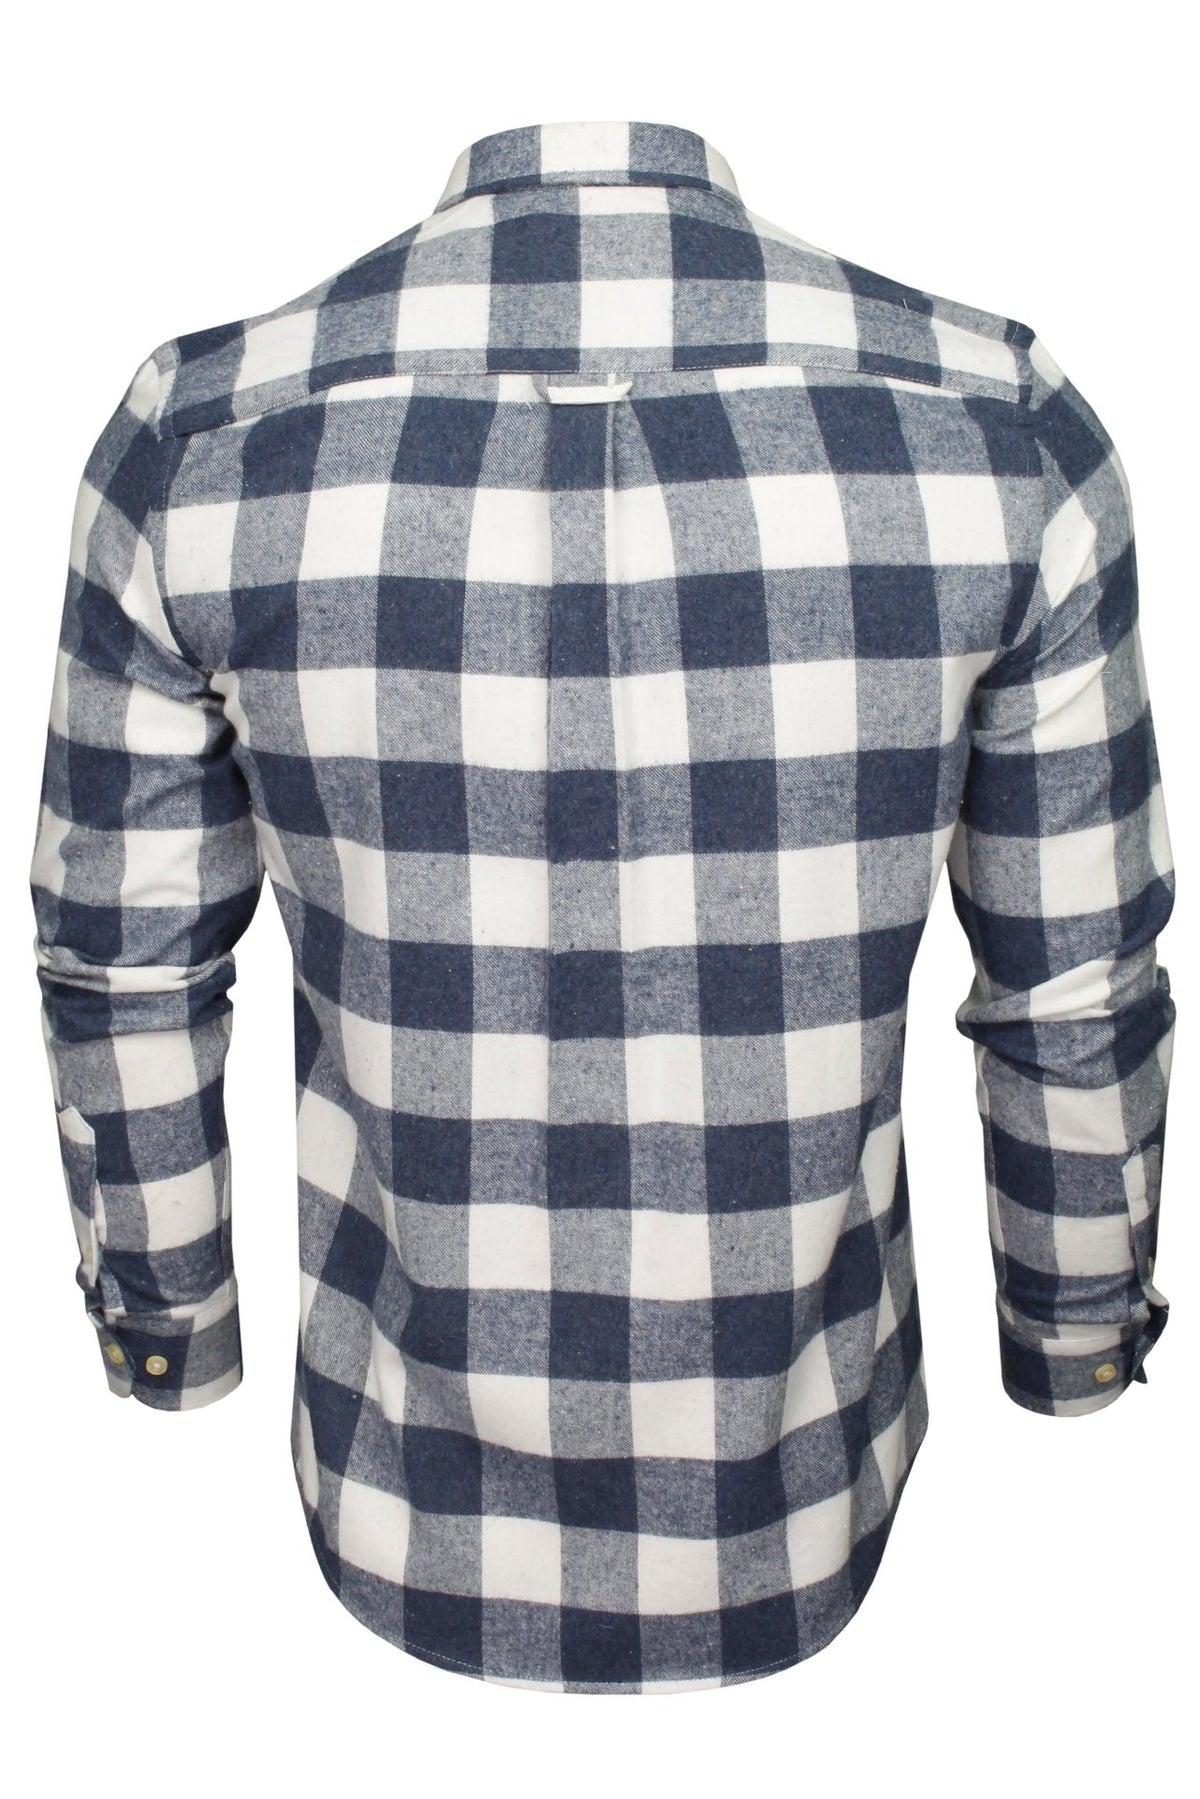 Xact Mens Soft Flannel Buffalo Check Shirt - Long Sleeved, 03, Xsh1136, Jack - Navy/ White